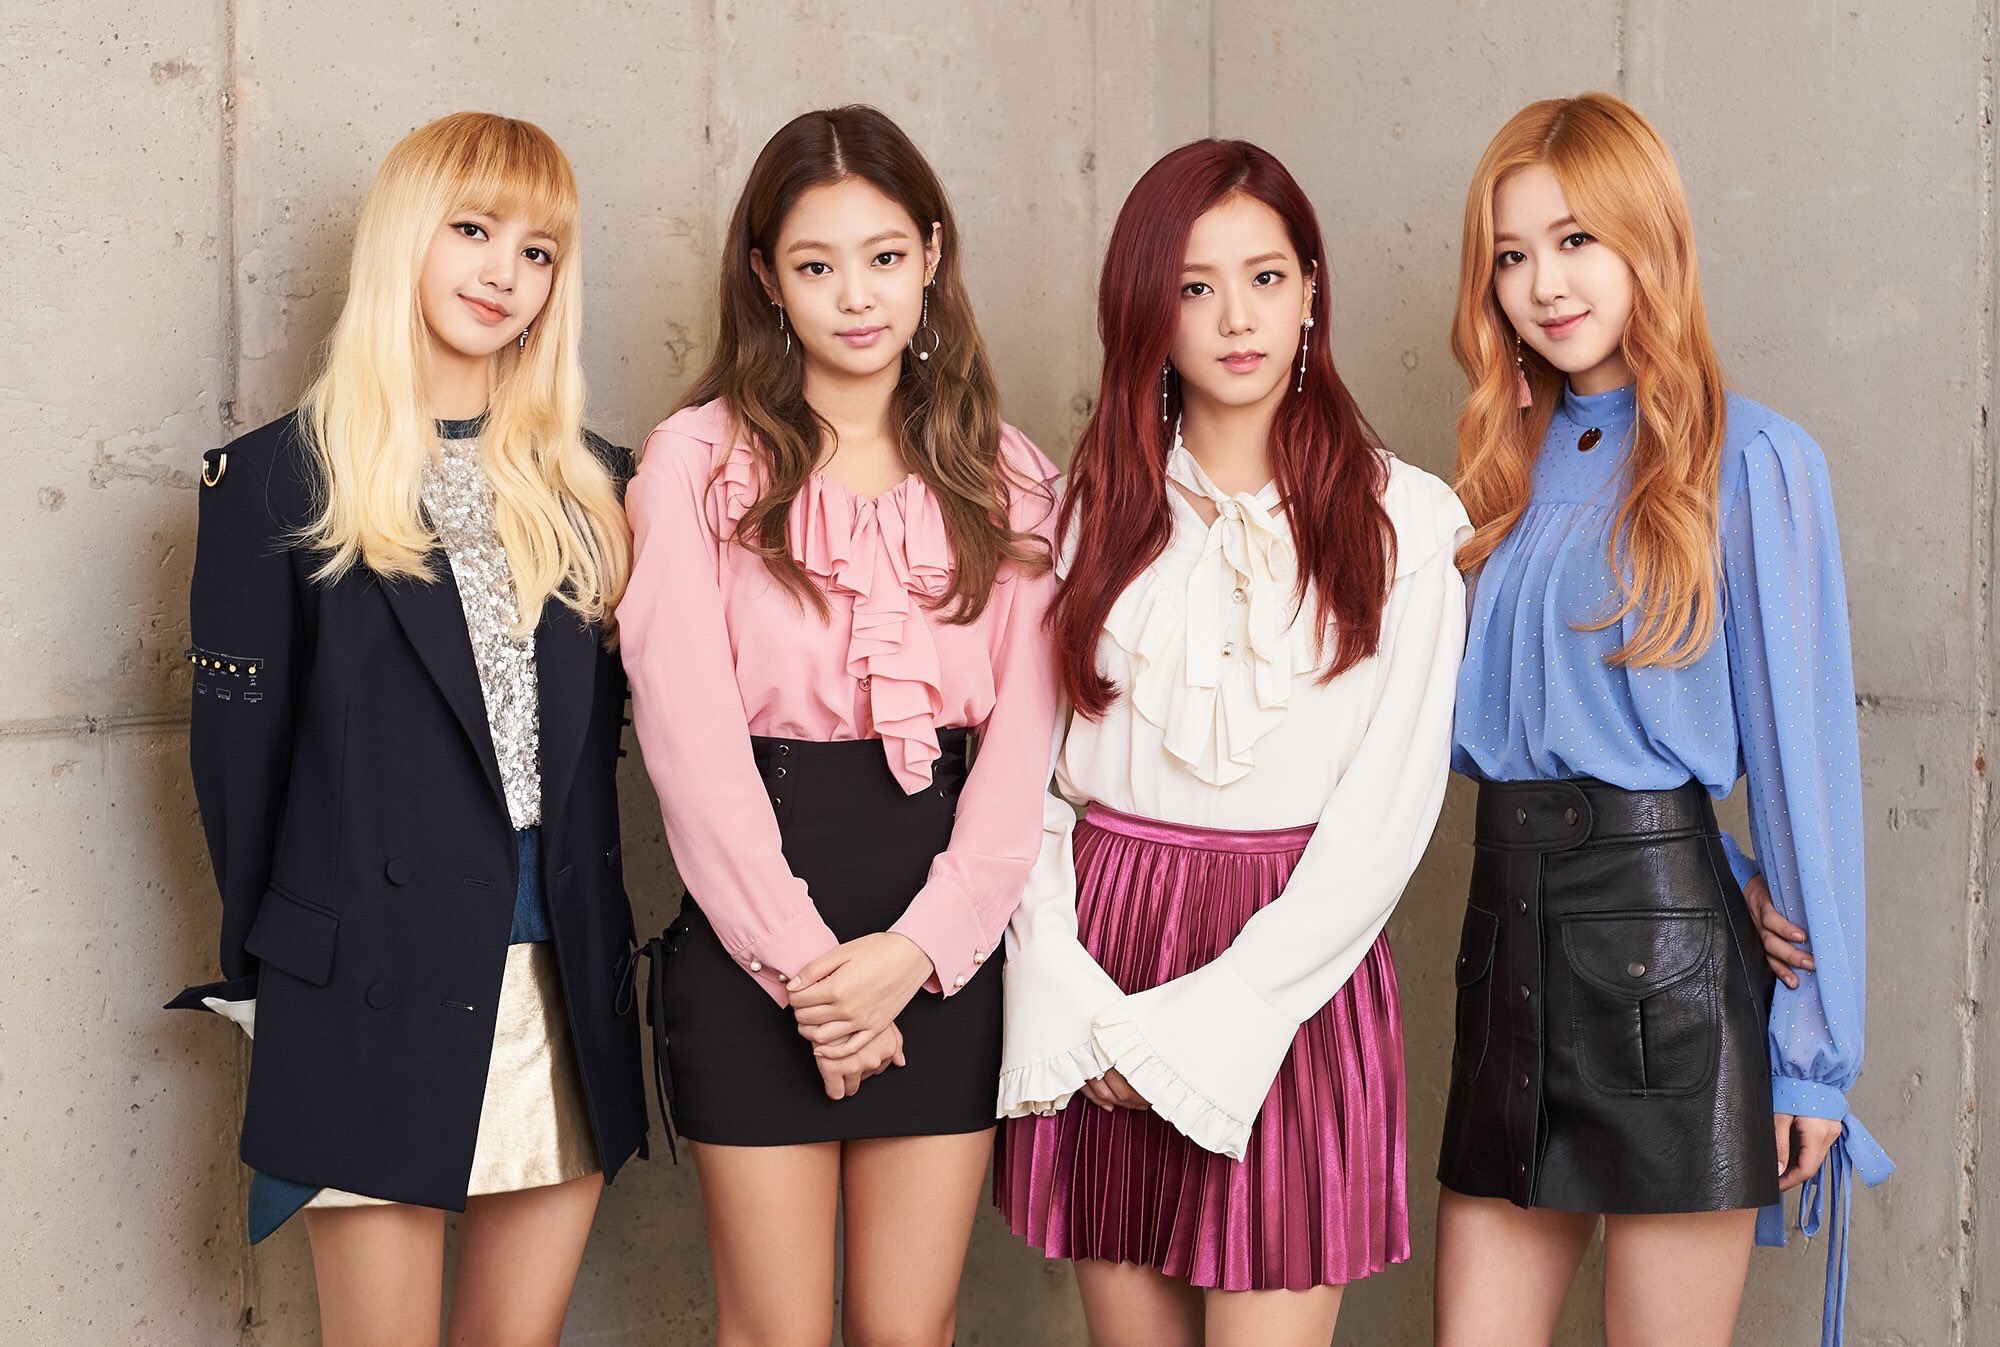 blackpink,韩国娱乐公司yg entertainment于2016年推出的女子组合, 由